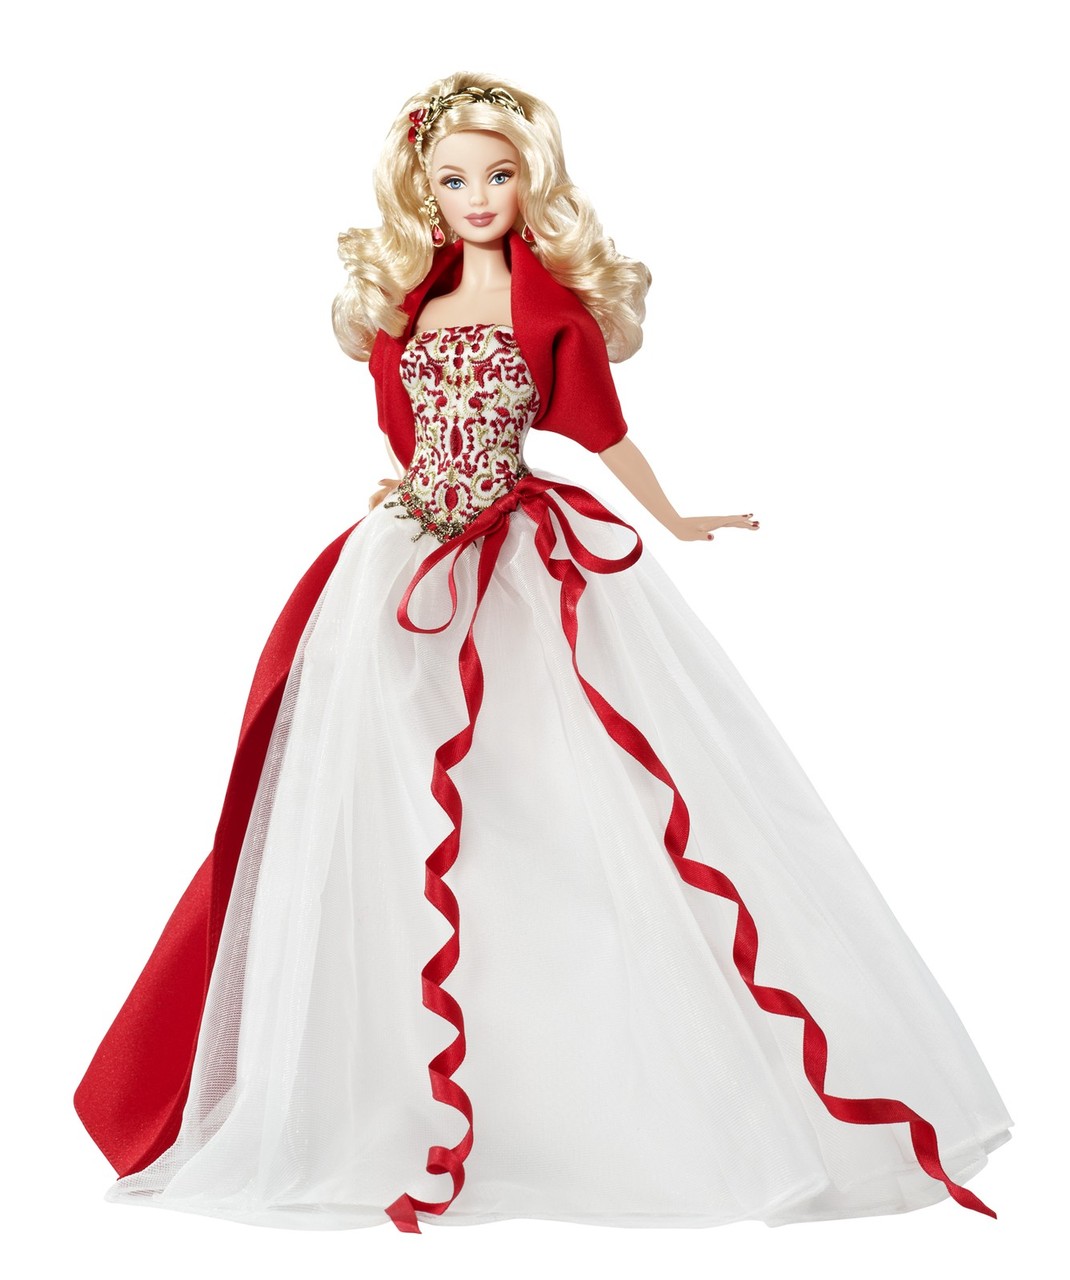 Barbie Doll HD Wallpaper Image